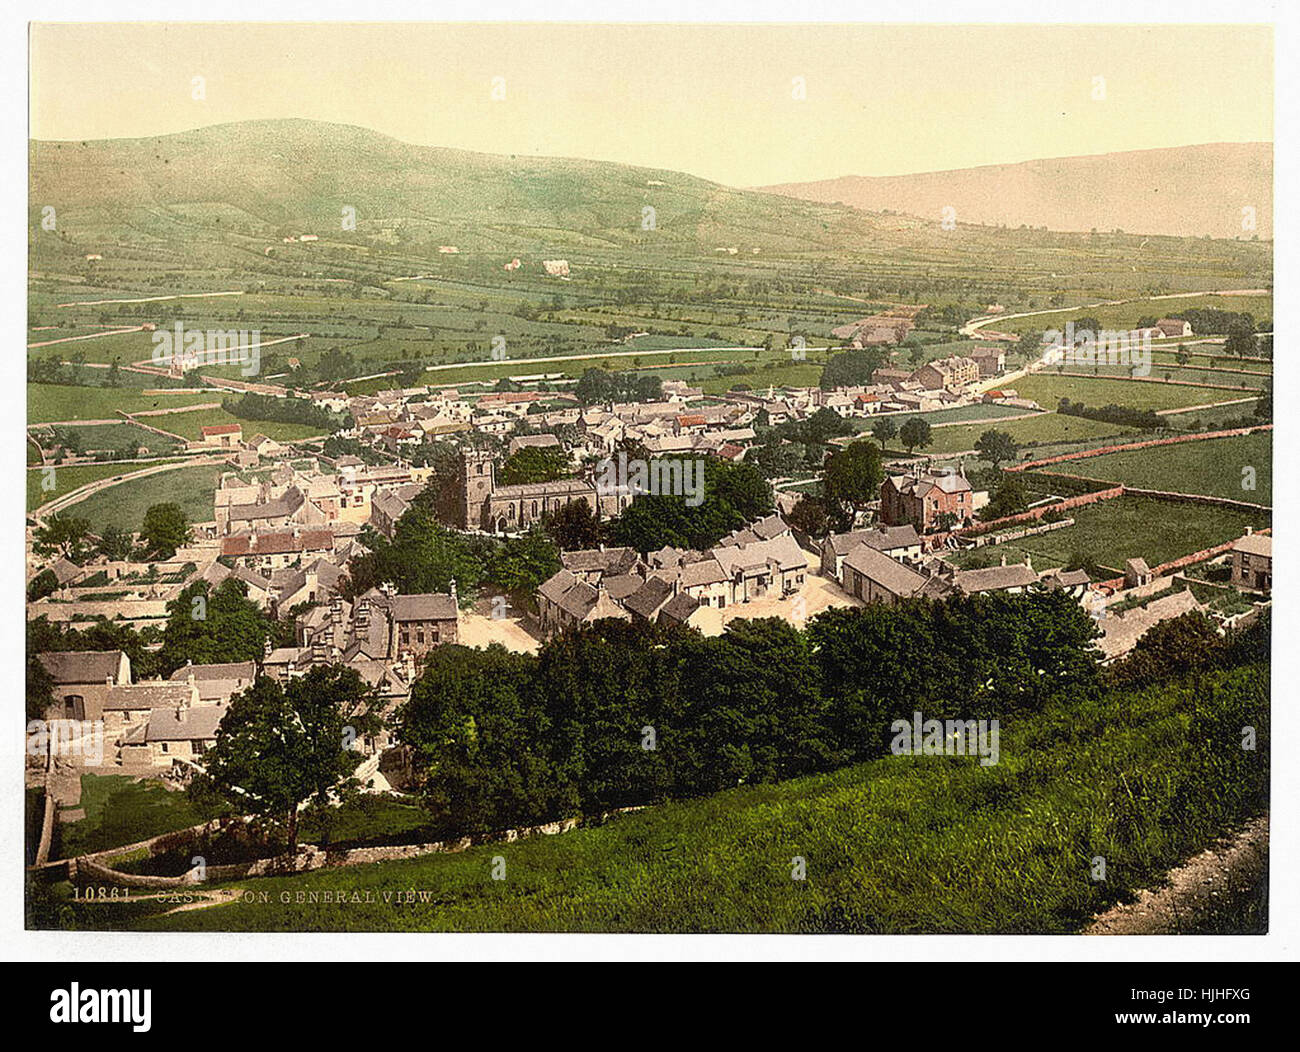 Gesamtansicht, Castleton, Derbyshire, England - Photochrom XIXth Jahrhundert Stockfoto